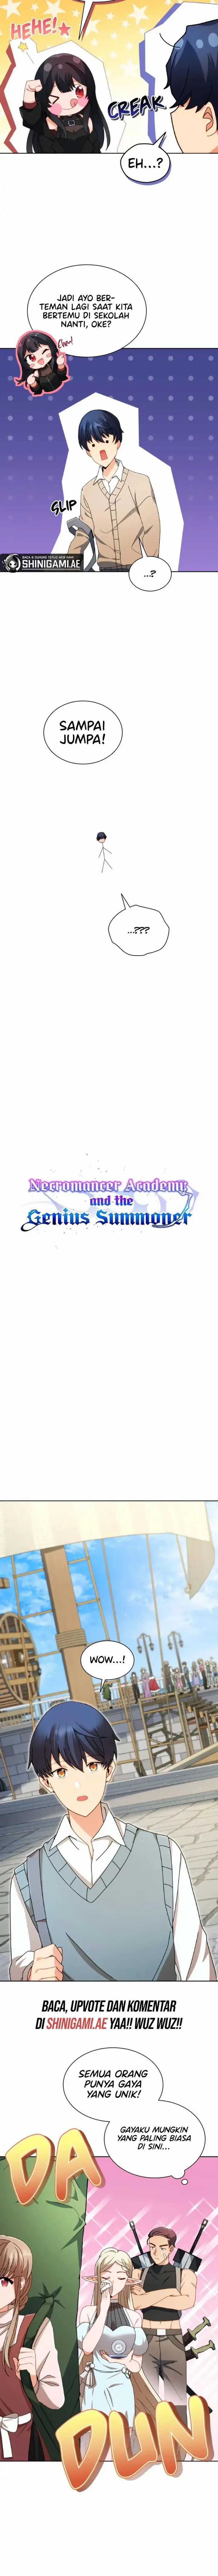 Necromancer Academy’s Genius Summoner Chapter 5